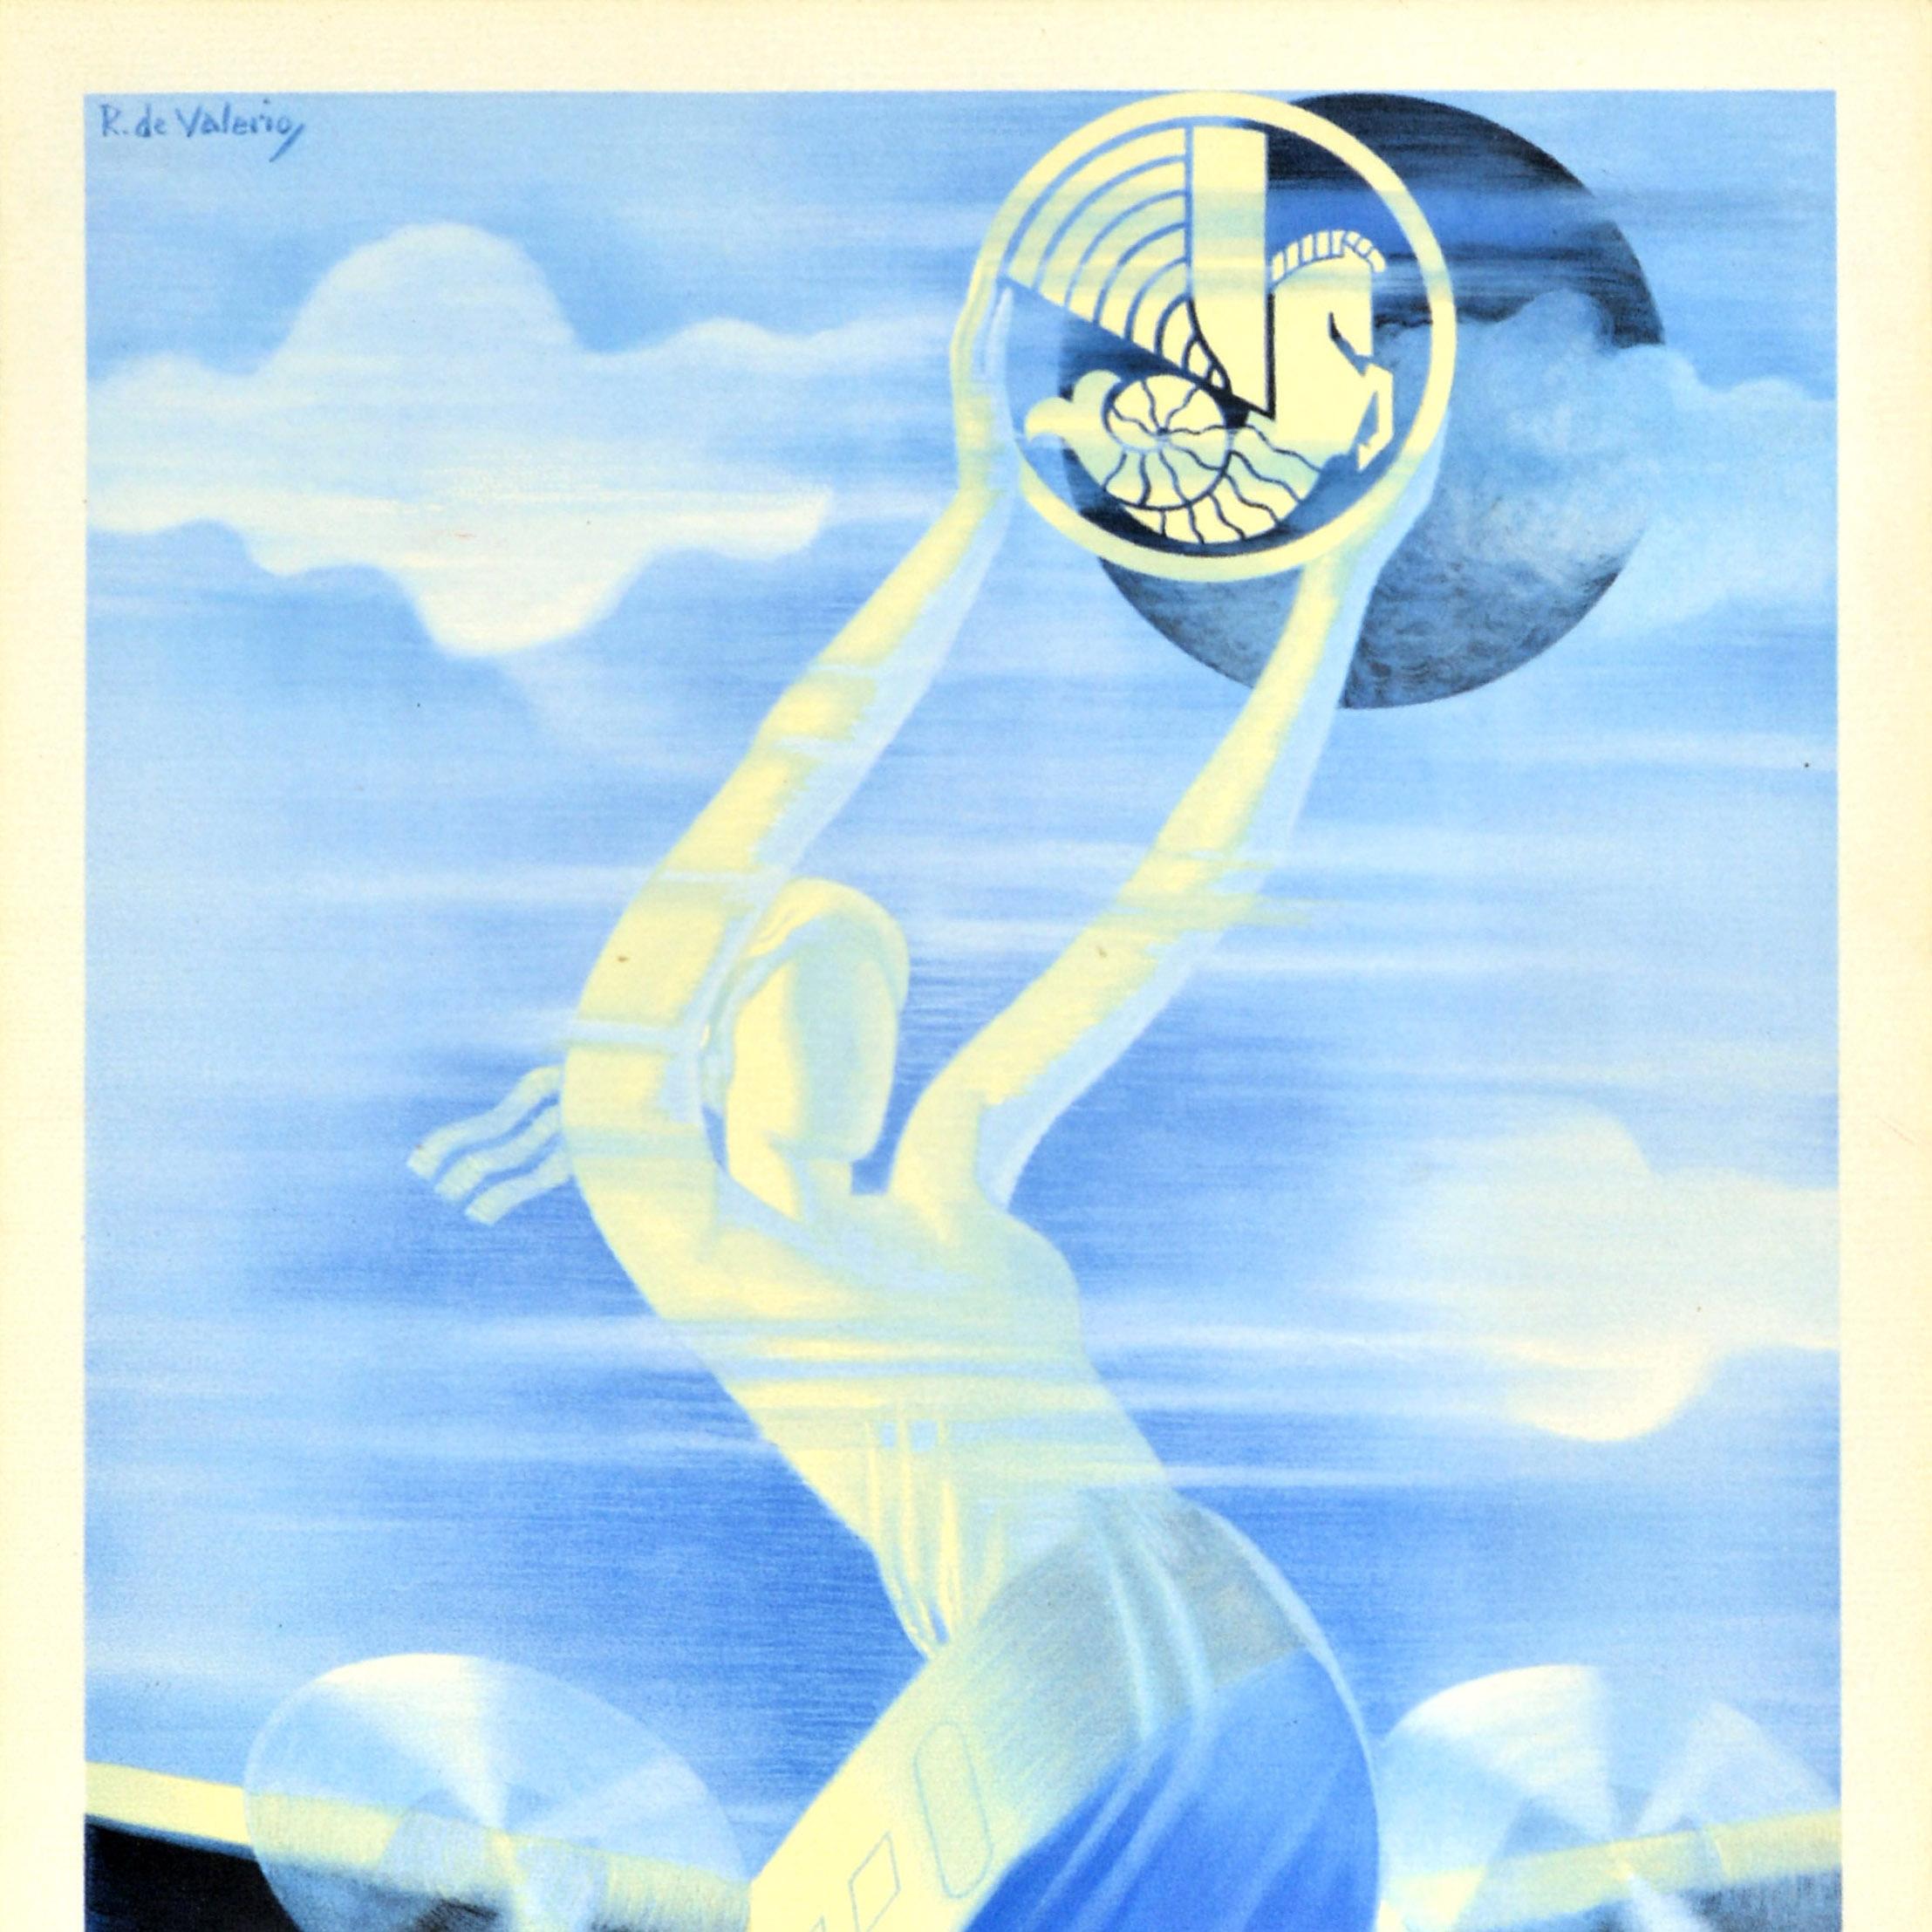 Original Vintage Travel Poster Air France Airways In All Skies Roger de Valerio For Sale 2